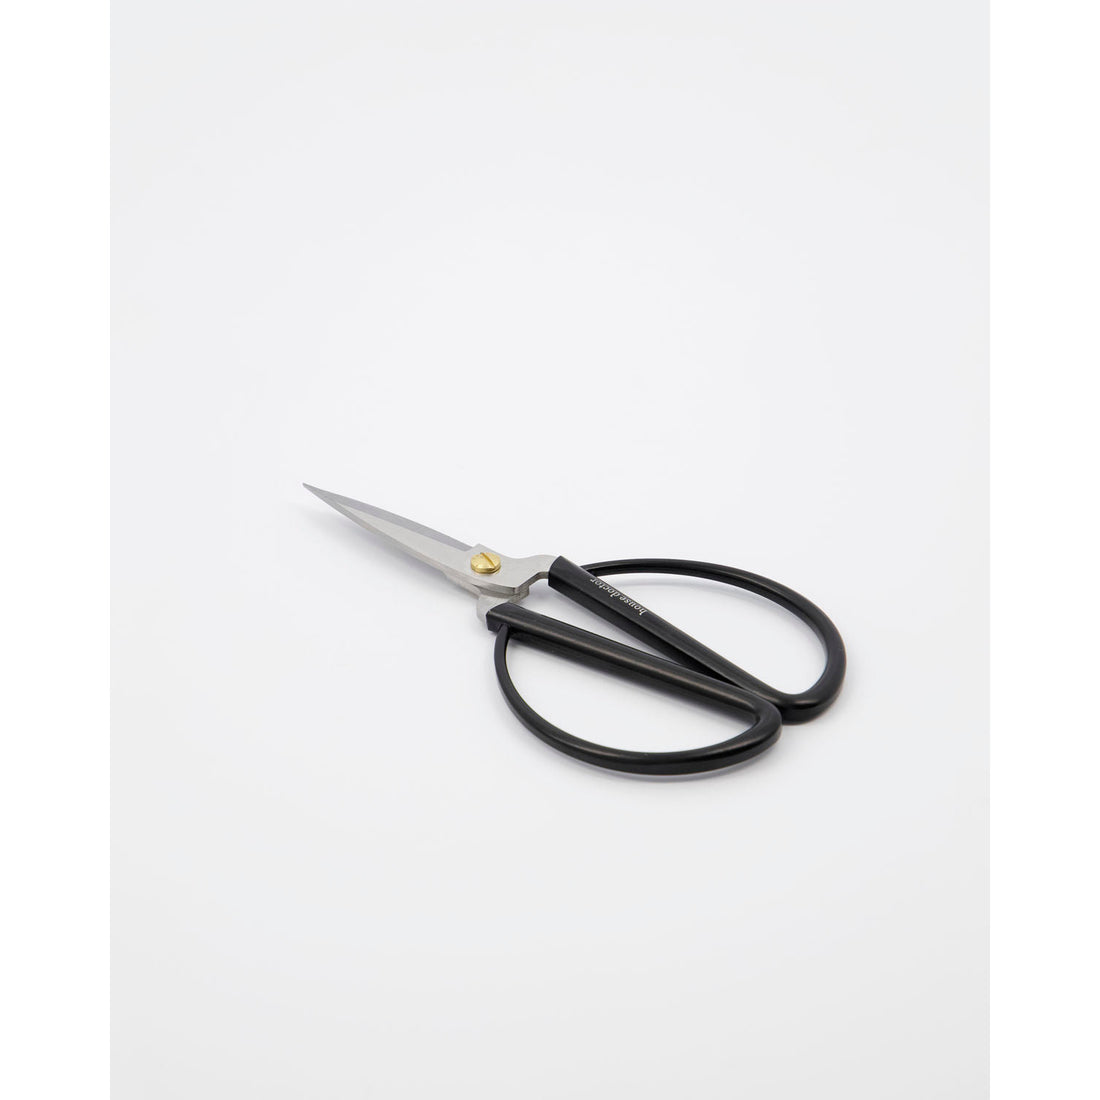 House Doctor - Scissors, Shears, Black/Silver - L: 15 cm, W: 8.1 cm